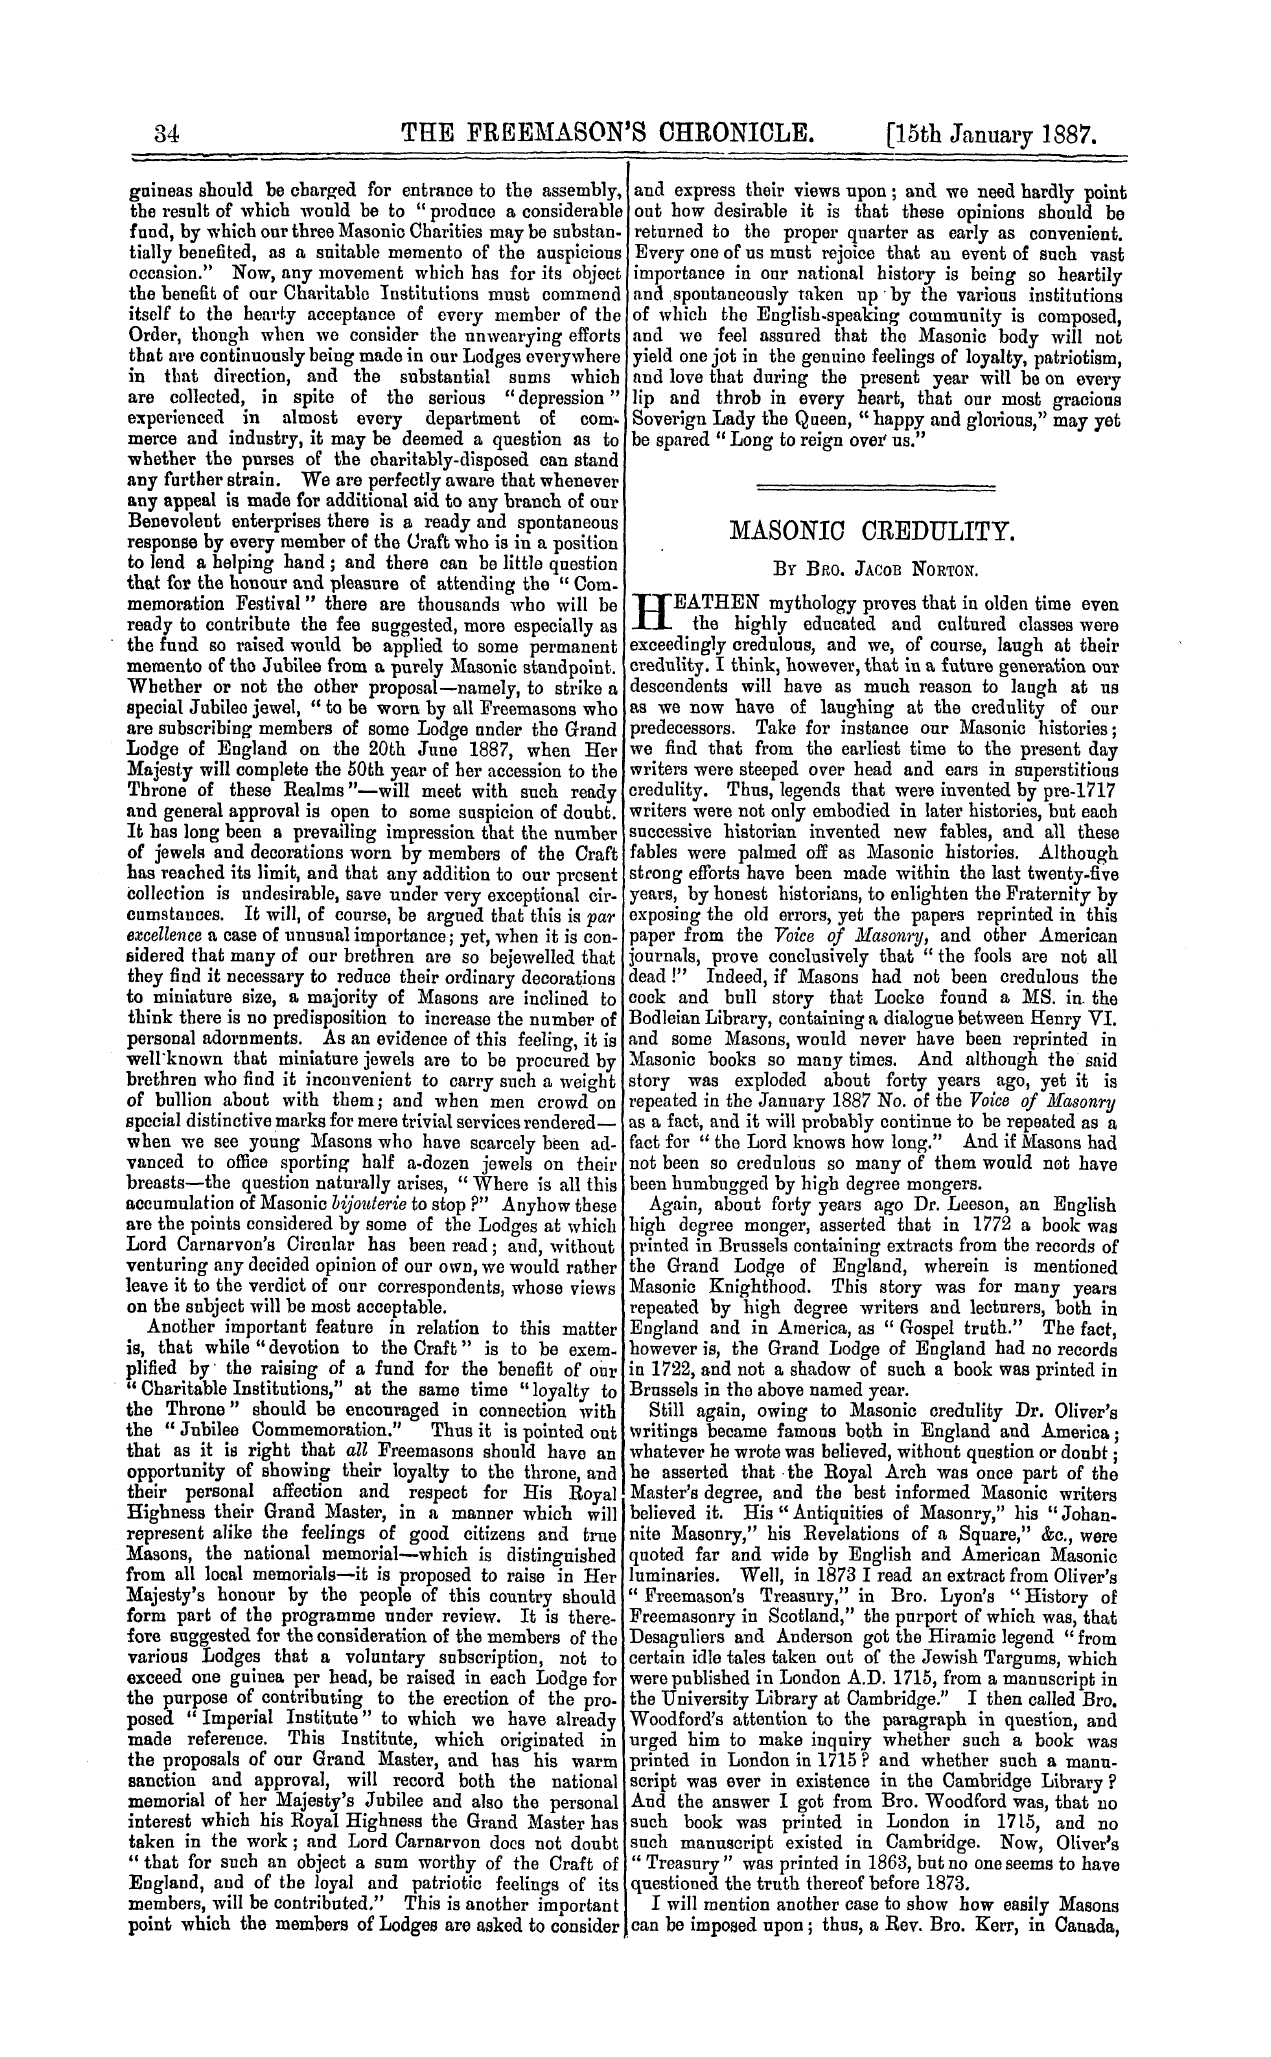 The Freemason's Chronicle: 1887-01-15 - Masonic Credulity.